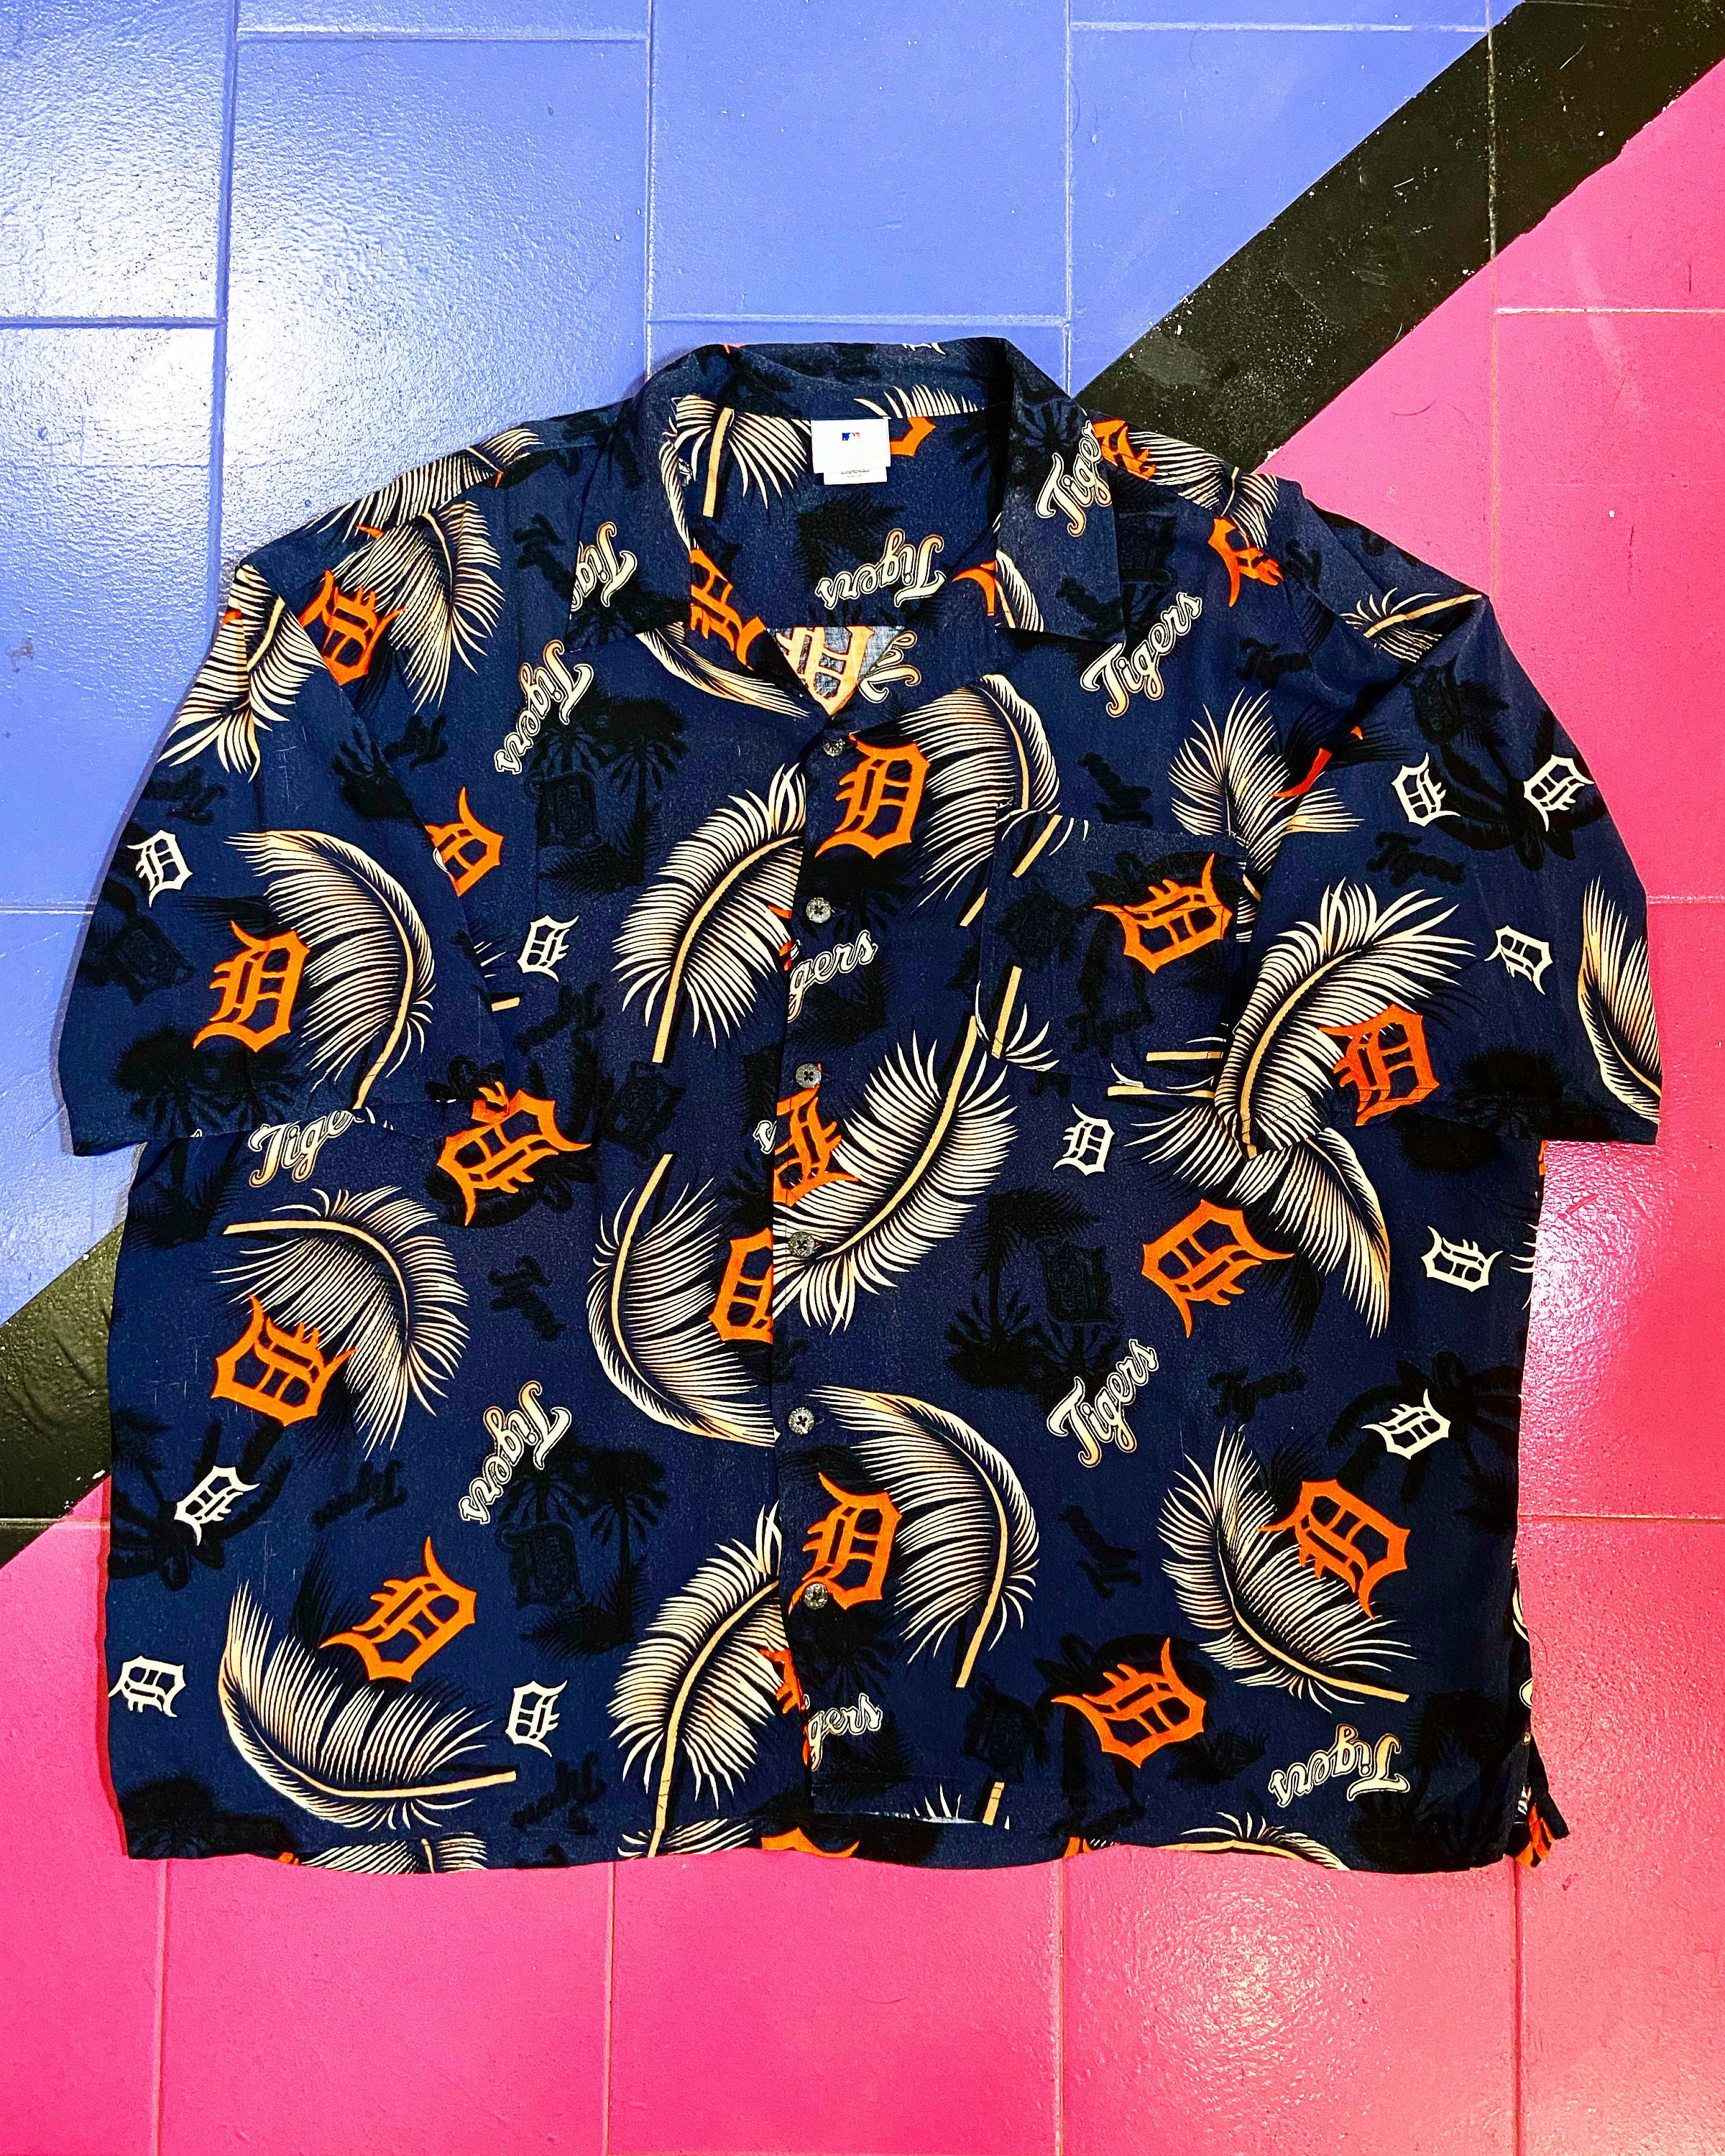 Detroit Tigers MLB Custom Name Hawaiian Shirt For Men Women Gift For Fan -  Freedomdesign